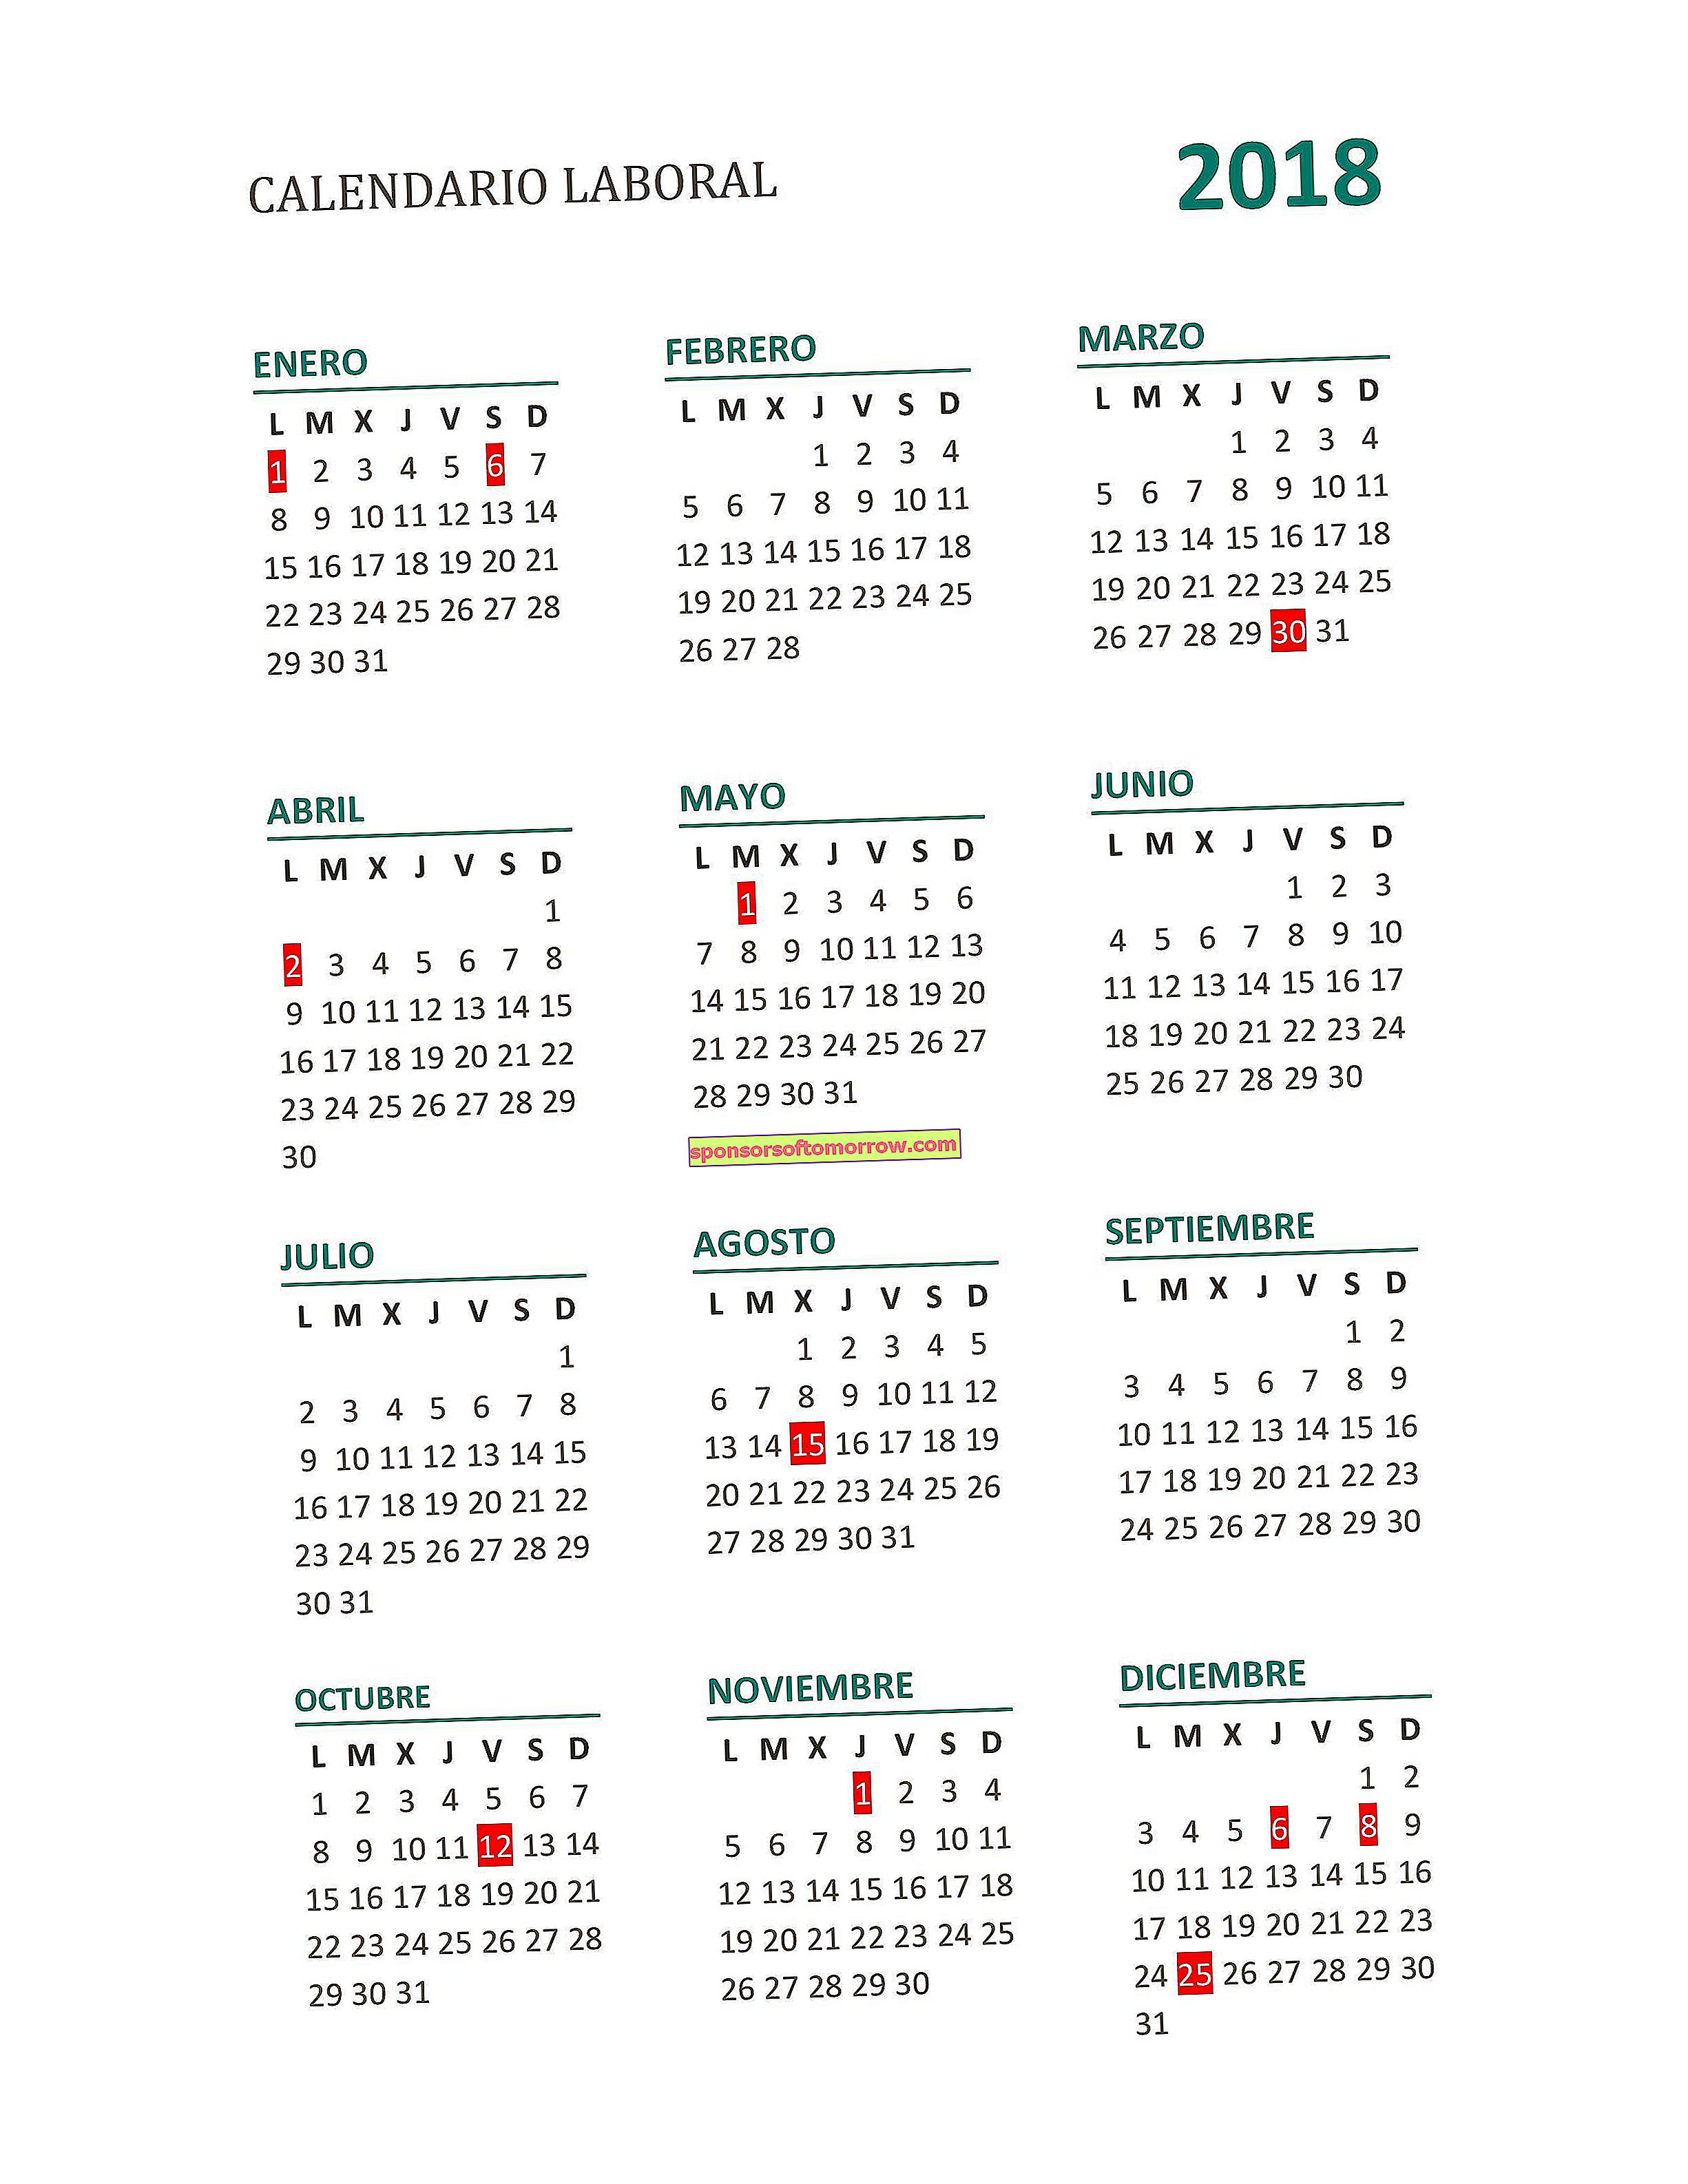 Kalender kerja 2018 penuh